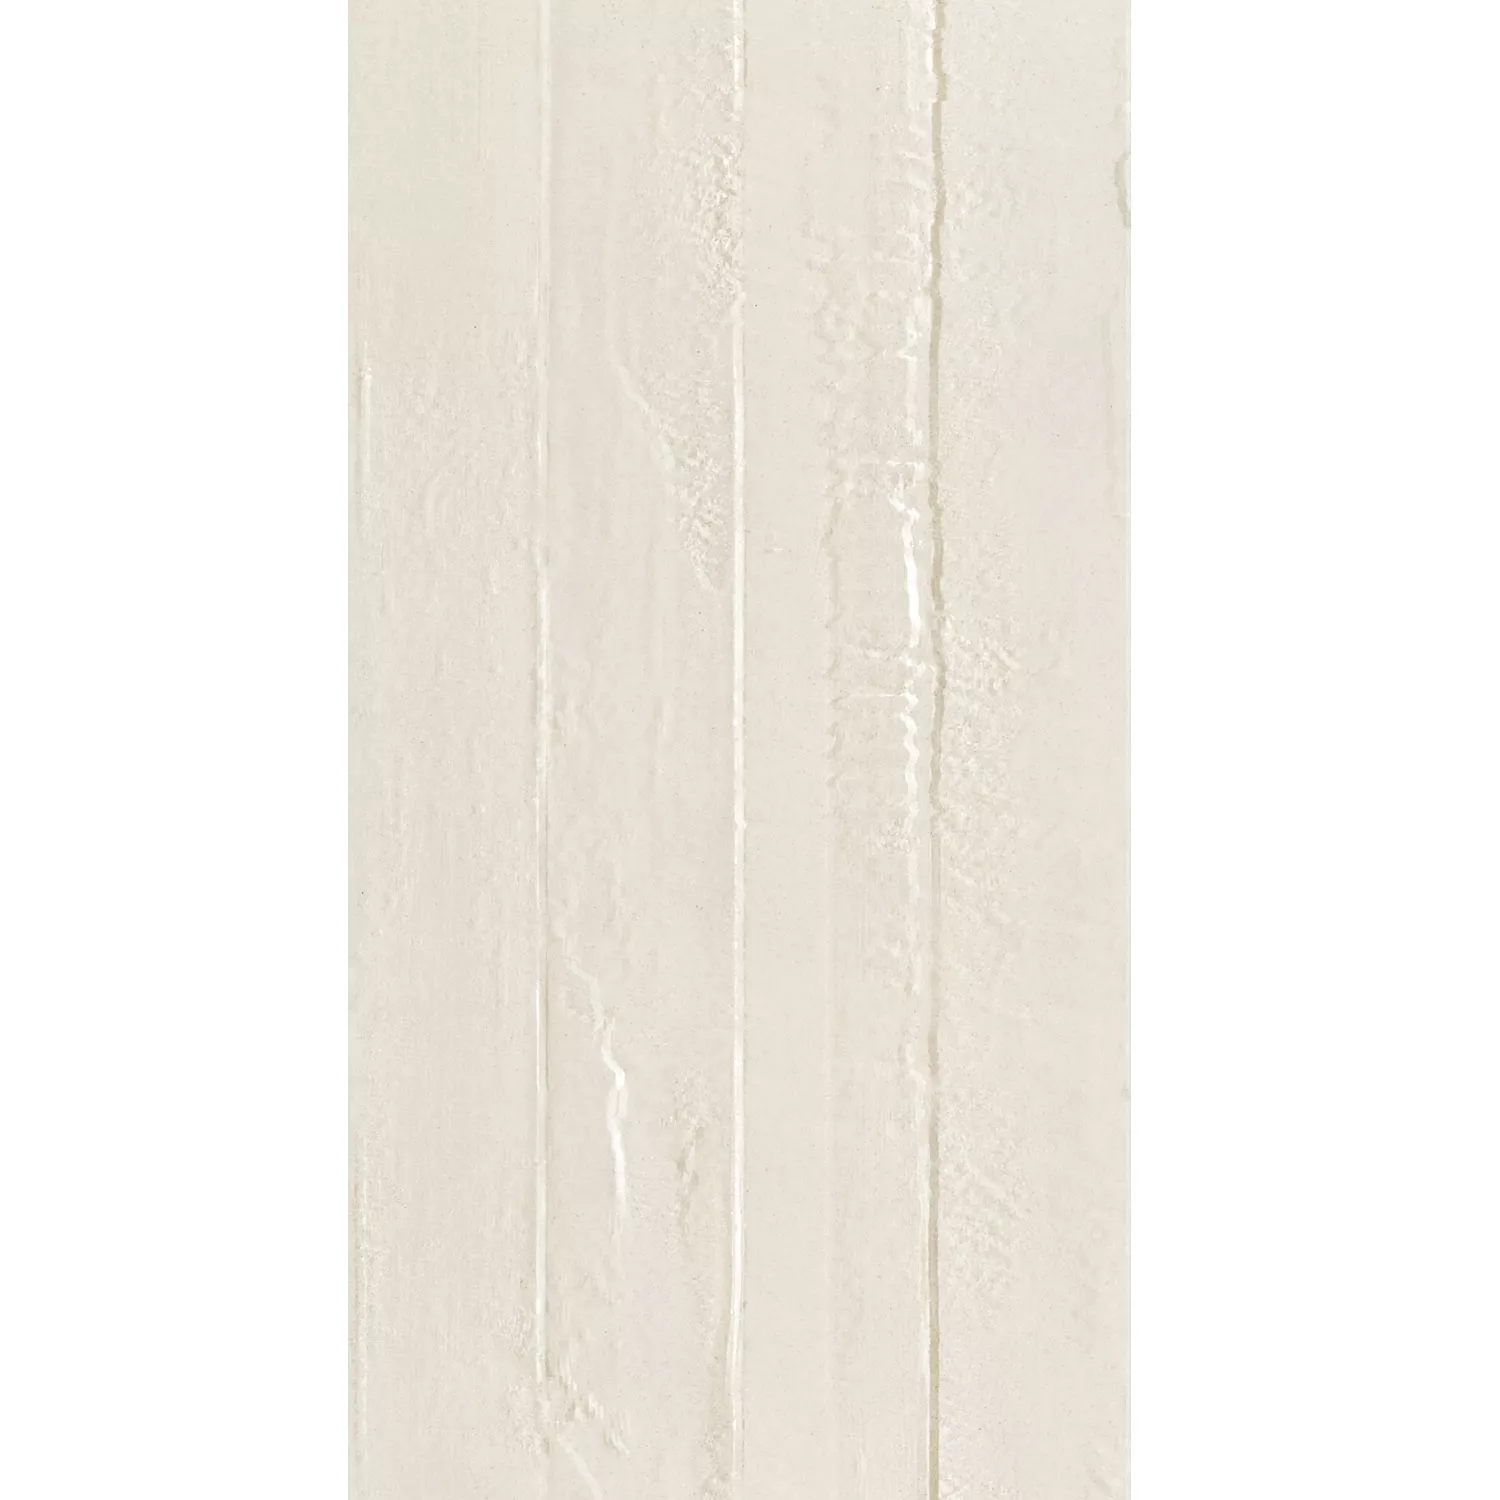 Vloertegels Steen Optic Lobetal Ivory 45x90cm